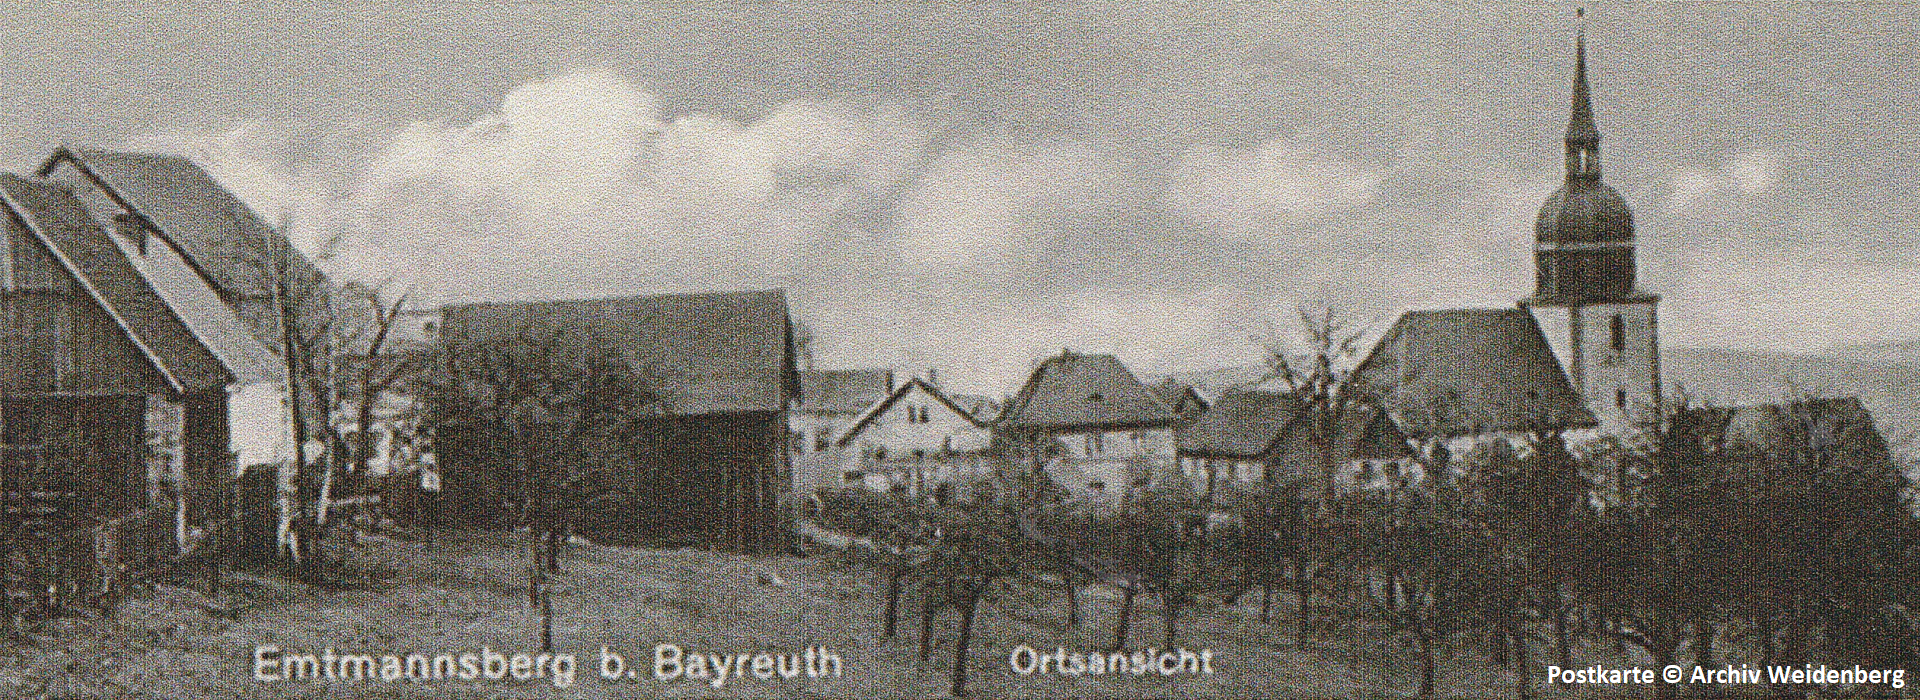 Ortsansicht Emtmannsberg Postkarte © Archiv Weidenberg